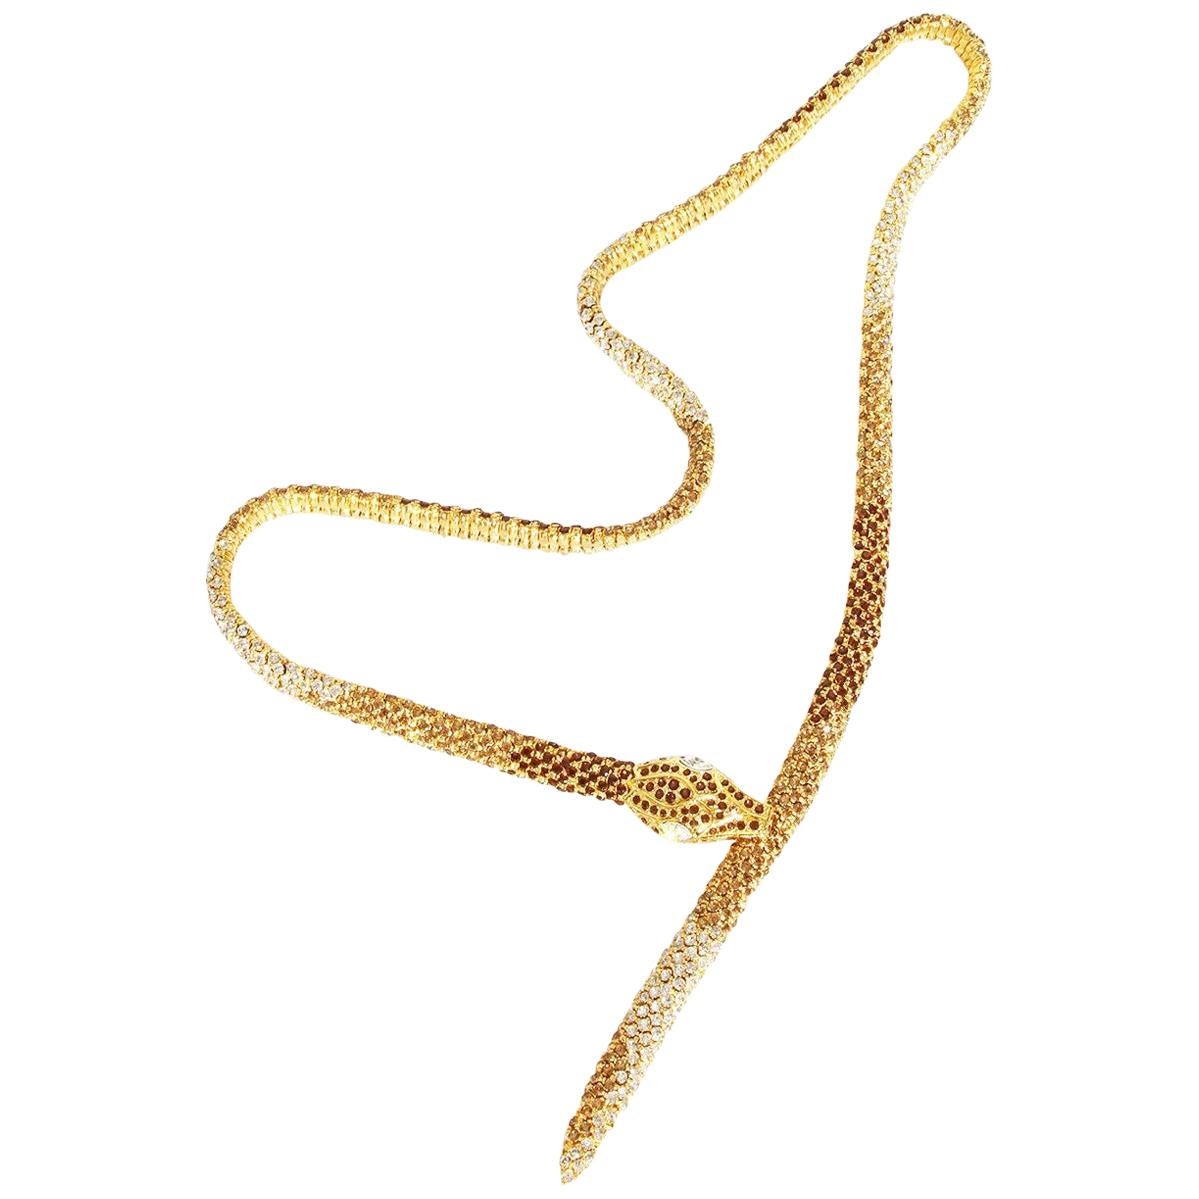 Valentino Swarovski Crystal Link “Snake” necklace C. 1970s